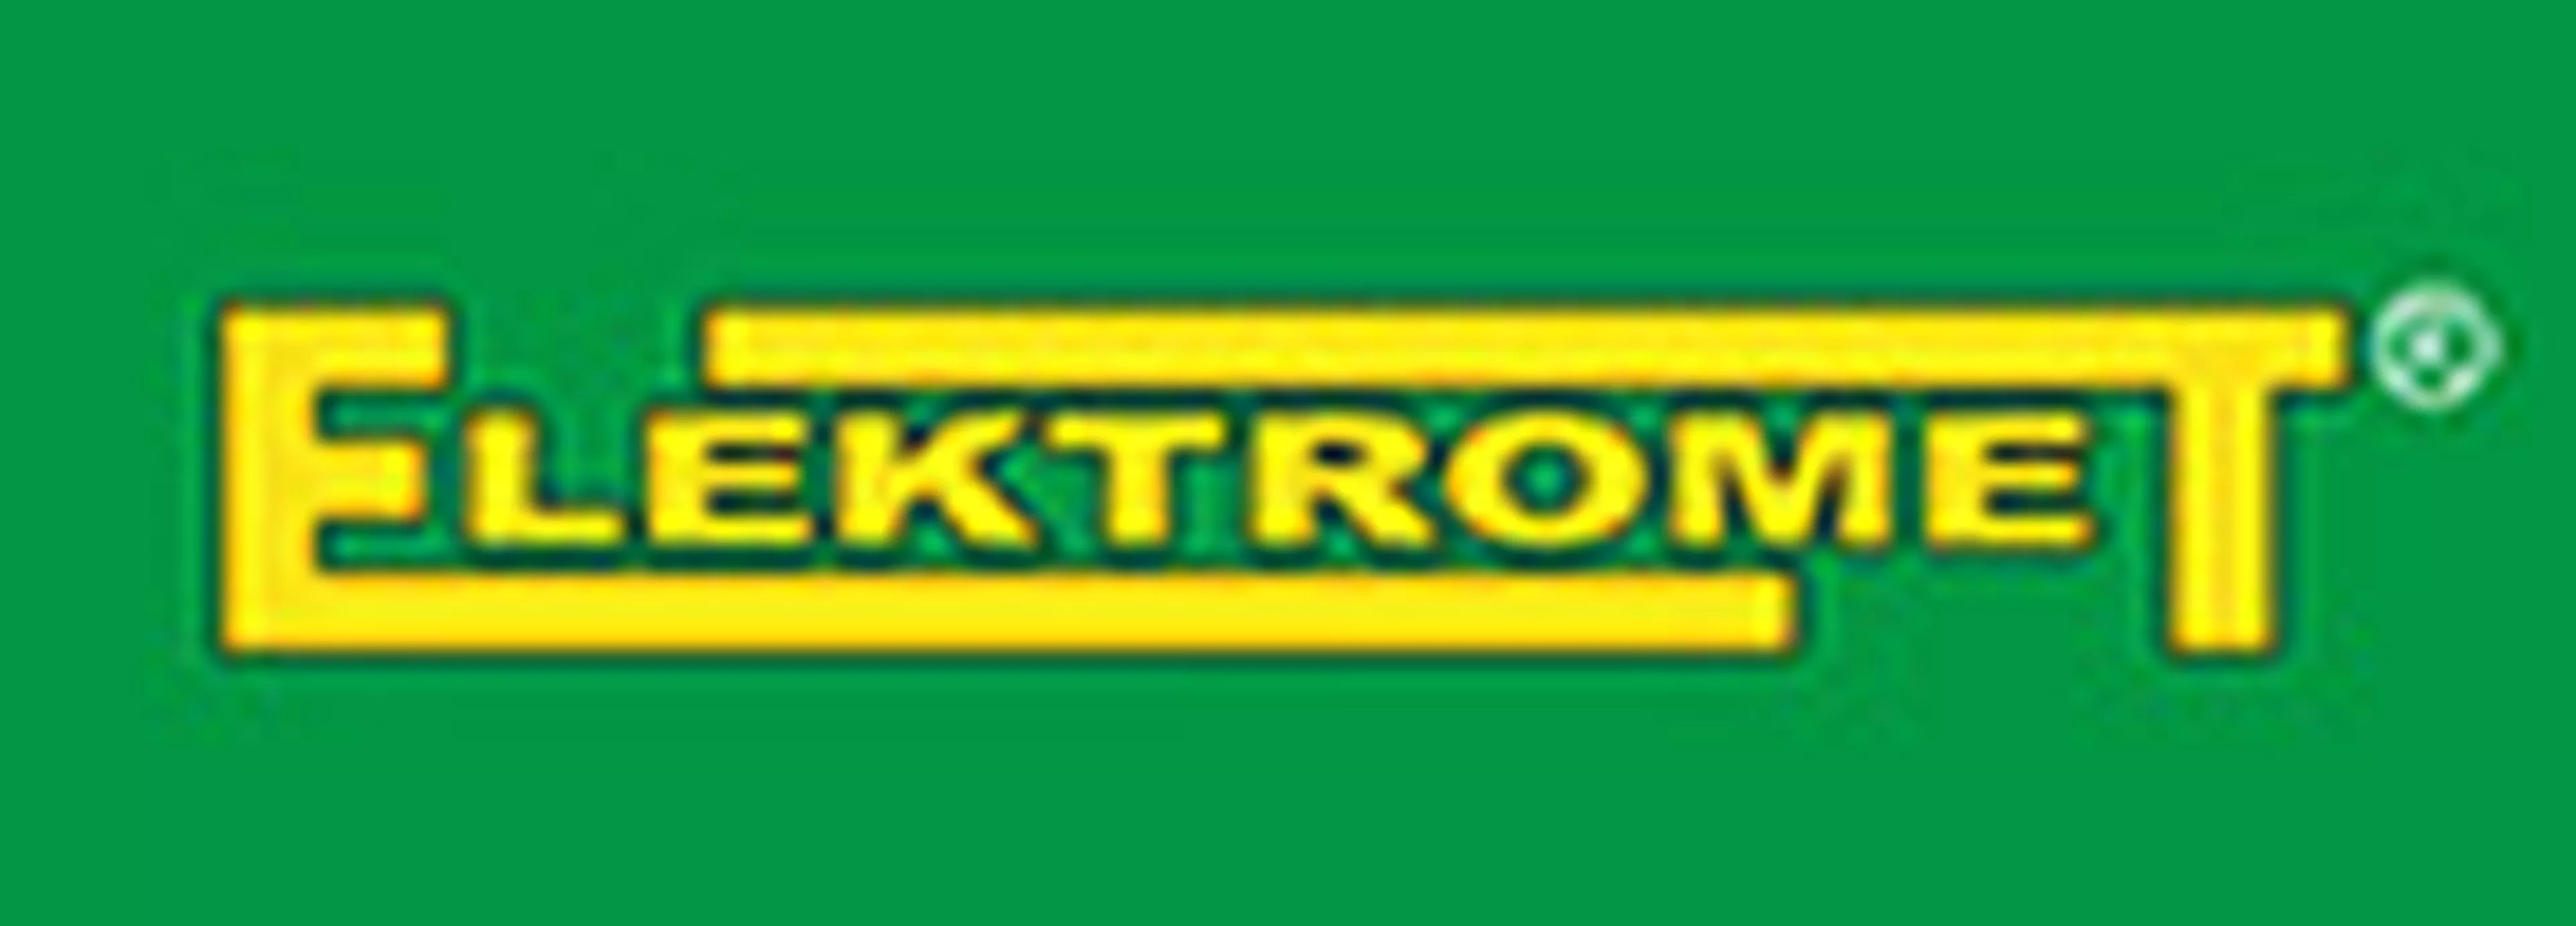 Elektromat logo